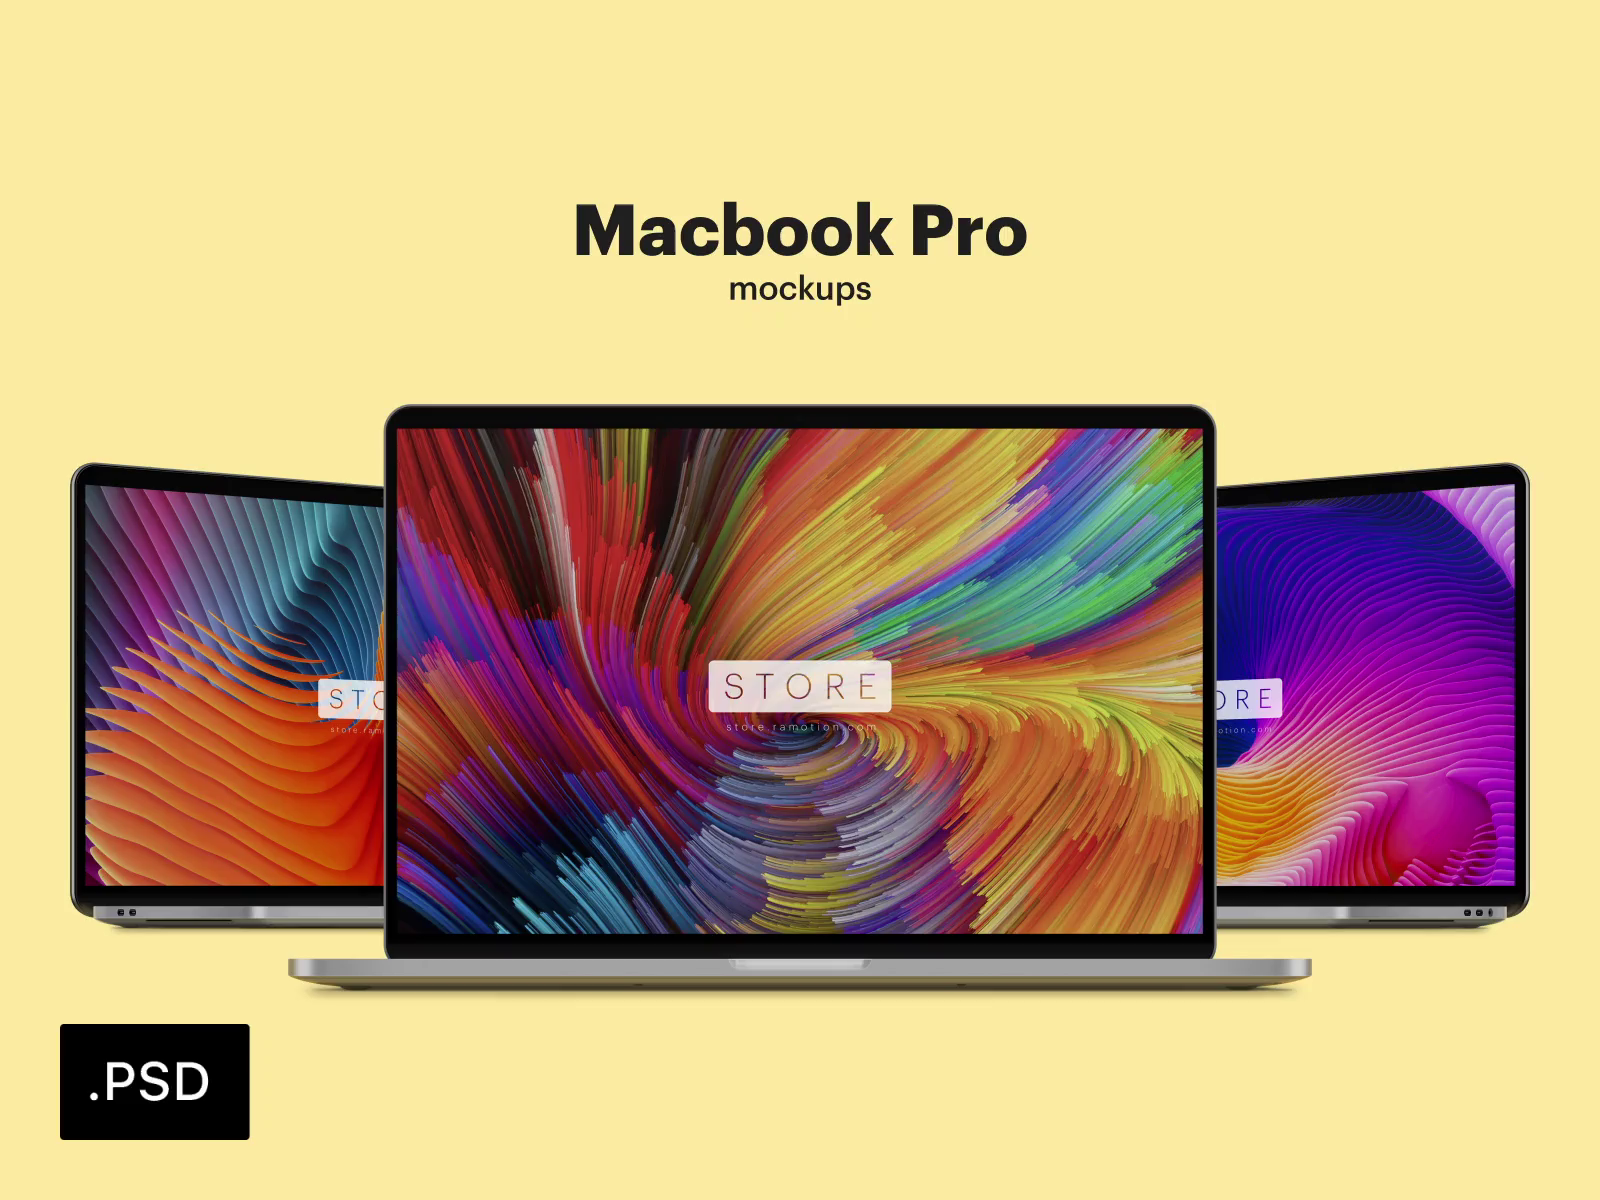 apple downloads for macbook pro